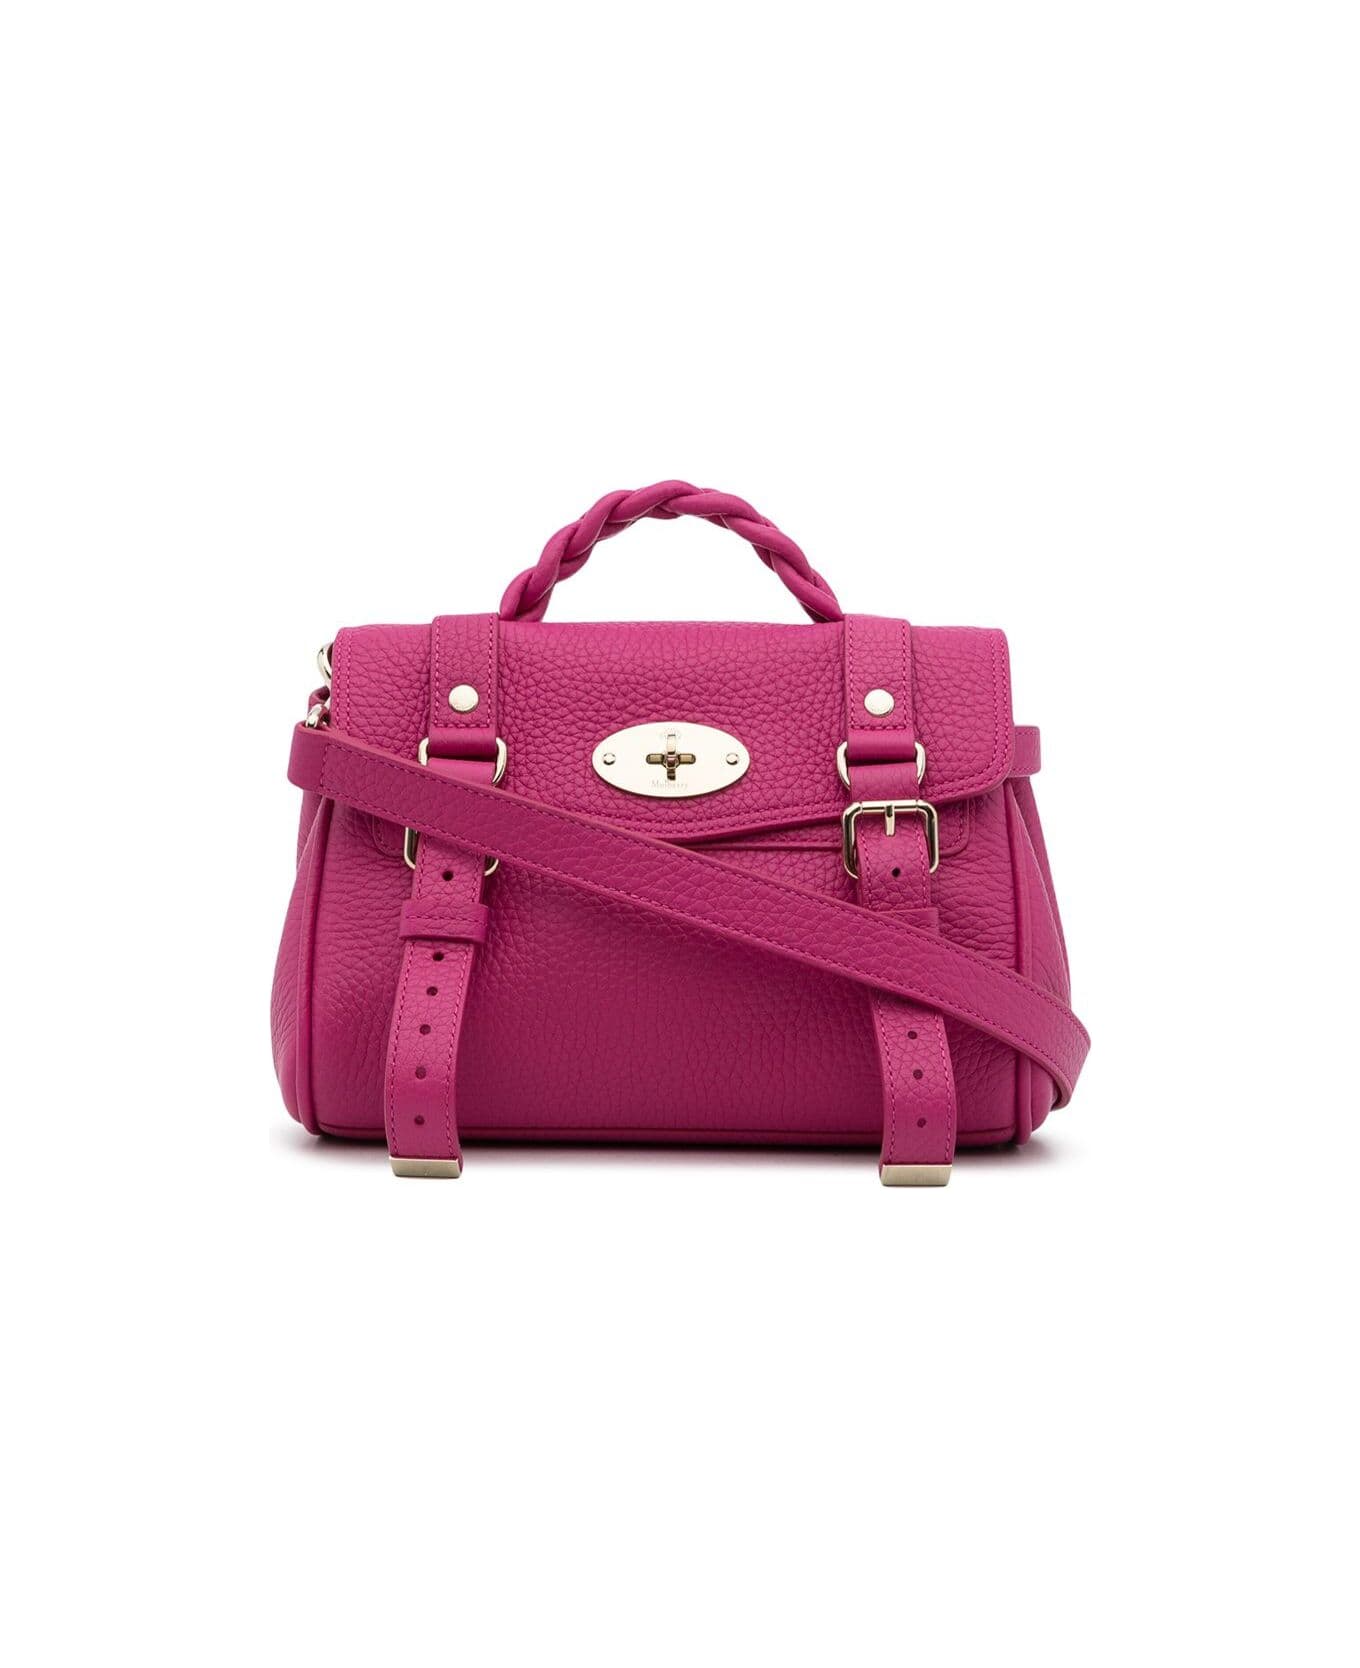 Mulberry 'mini Alexa' Fuchsia Handbag In Grainy Leather Woman Mulberry - Pink